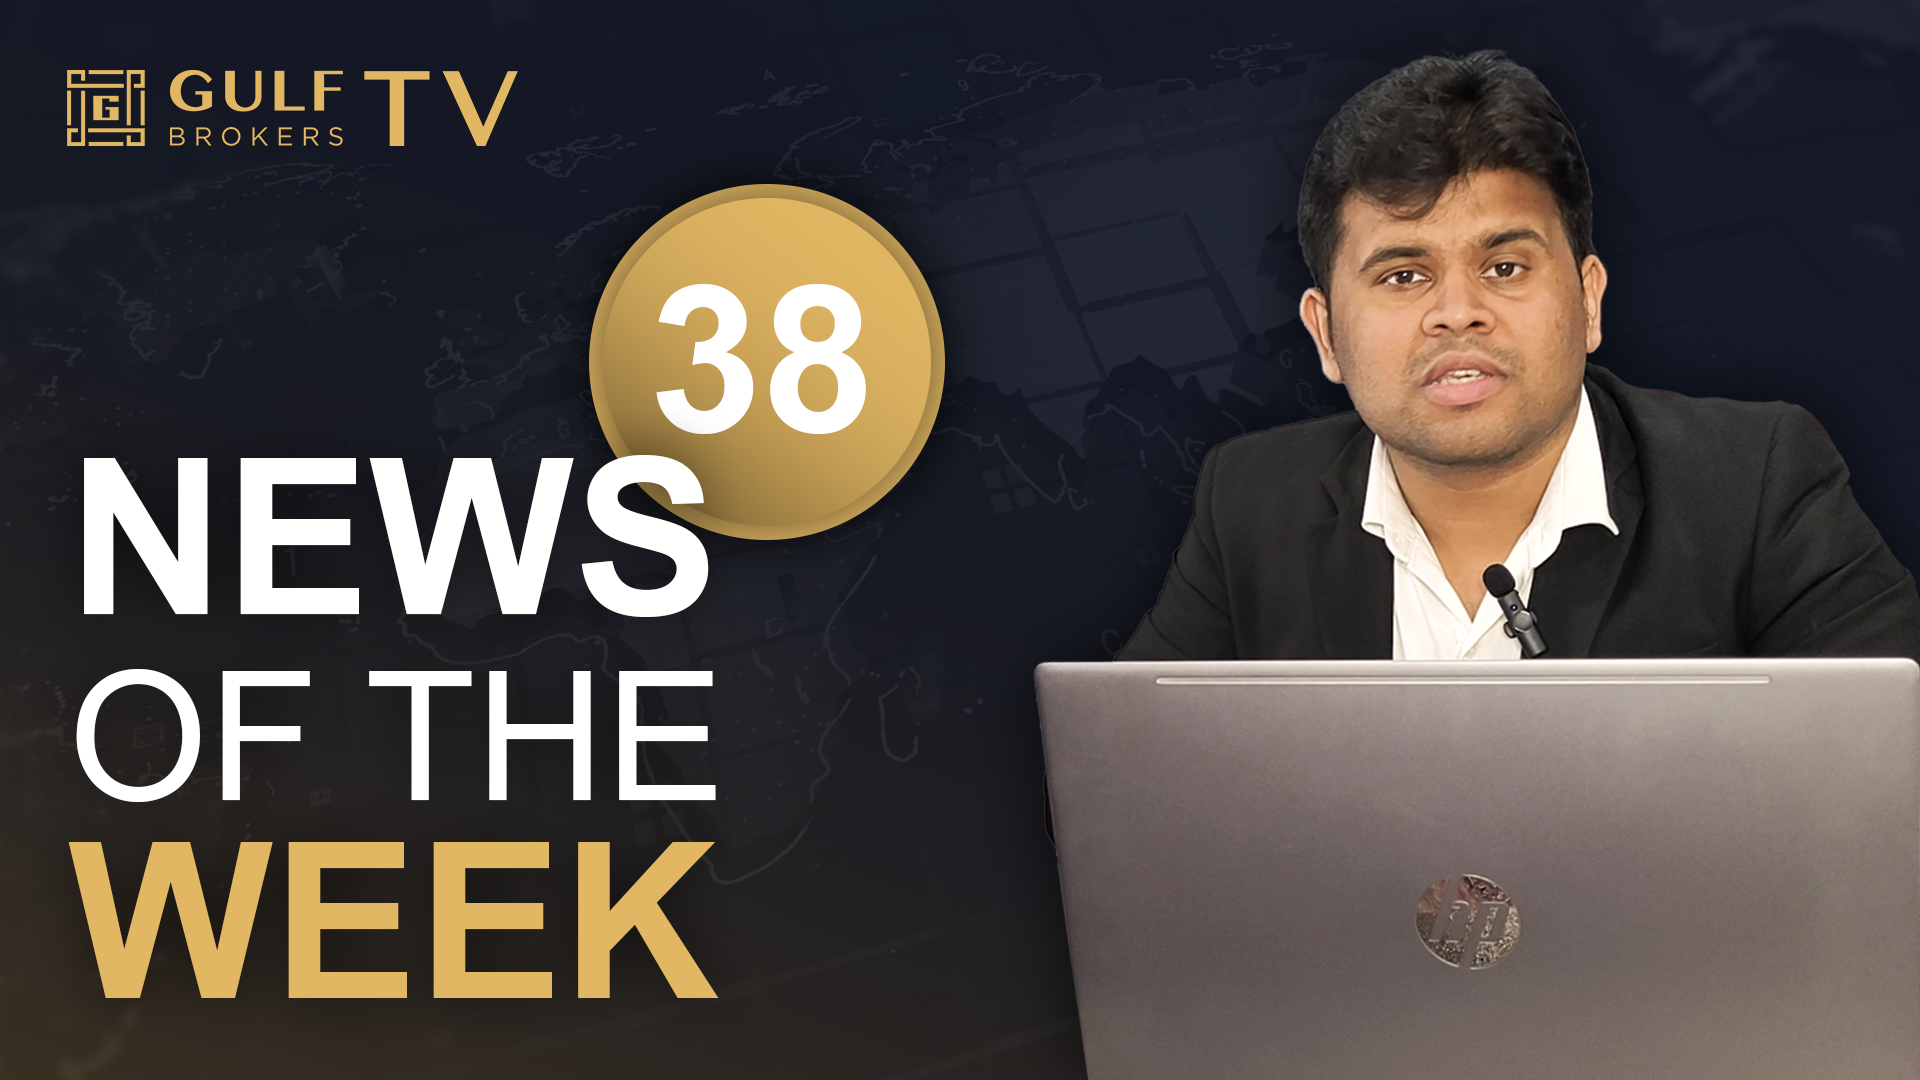 Gulfbrokers | Gulf Brokers | News of the week 38 | Syam KP